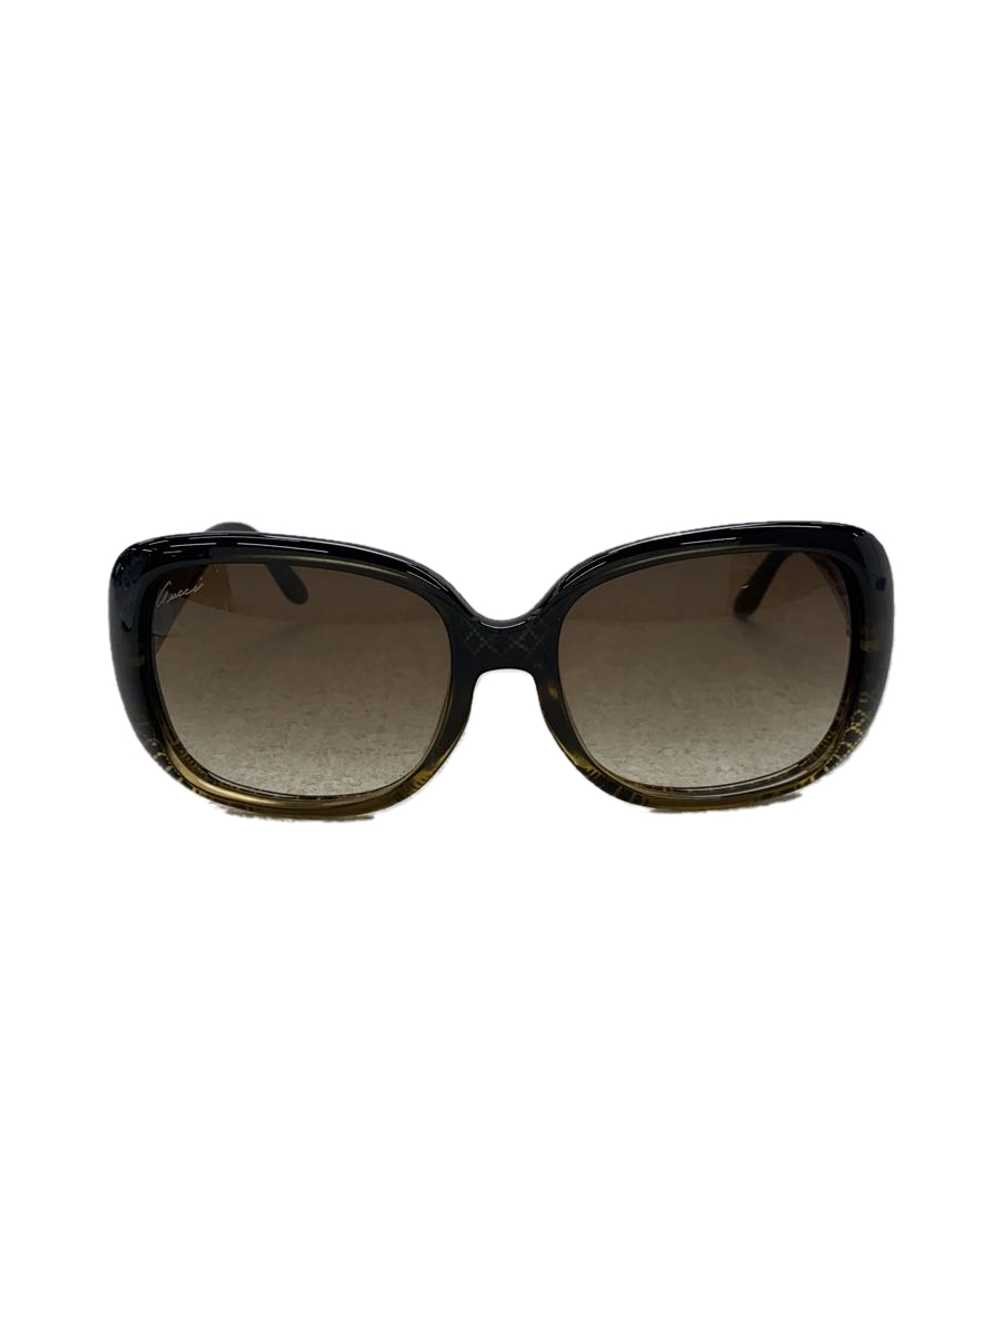 Used Gucci Sunglasses/Blk/Ladies/Gg3593 - image 1